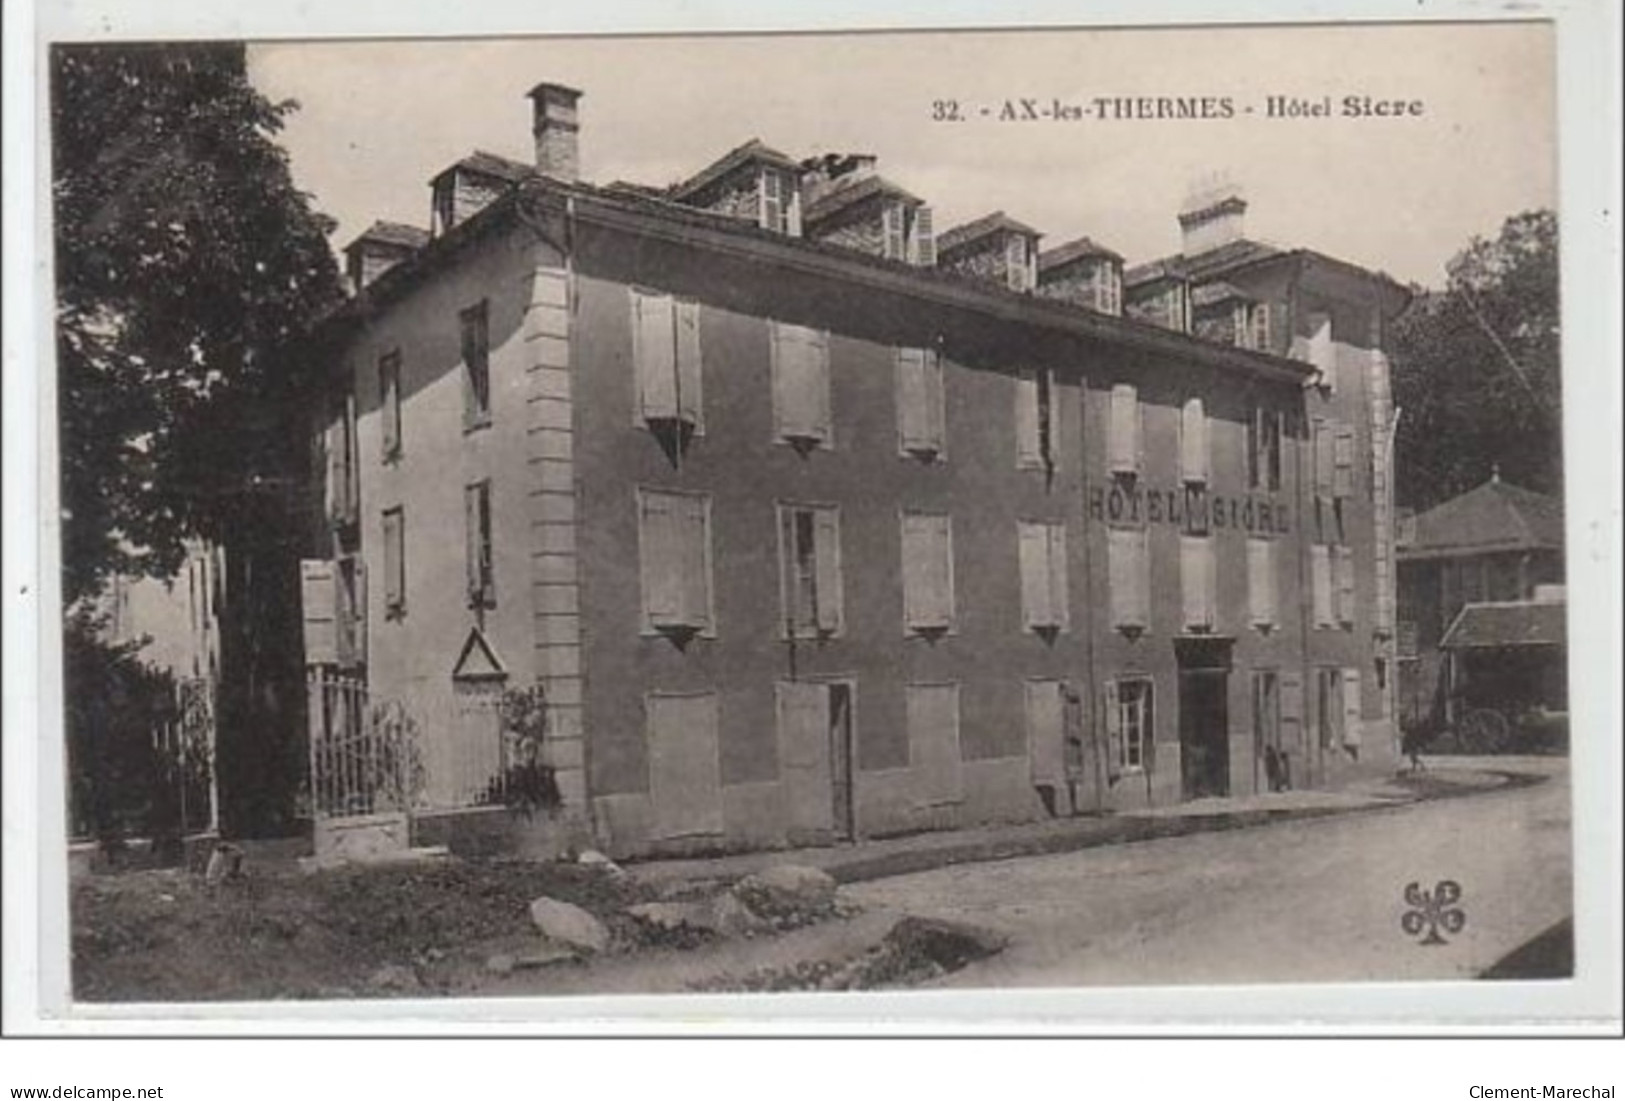 AX LES THERMES: Hôtel Sicre - Très Bon état - Ax Les Thermes